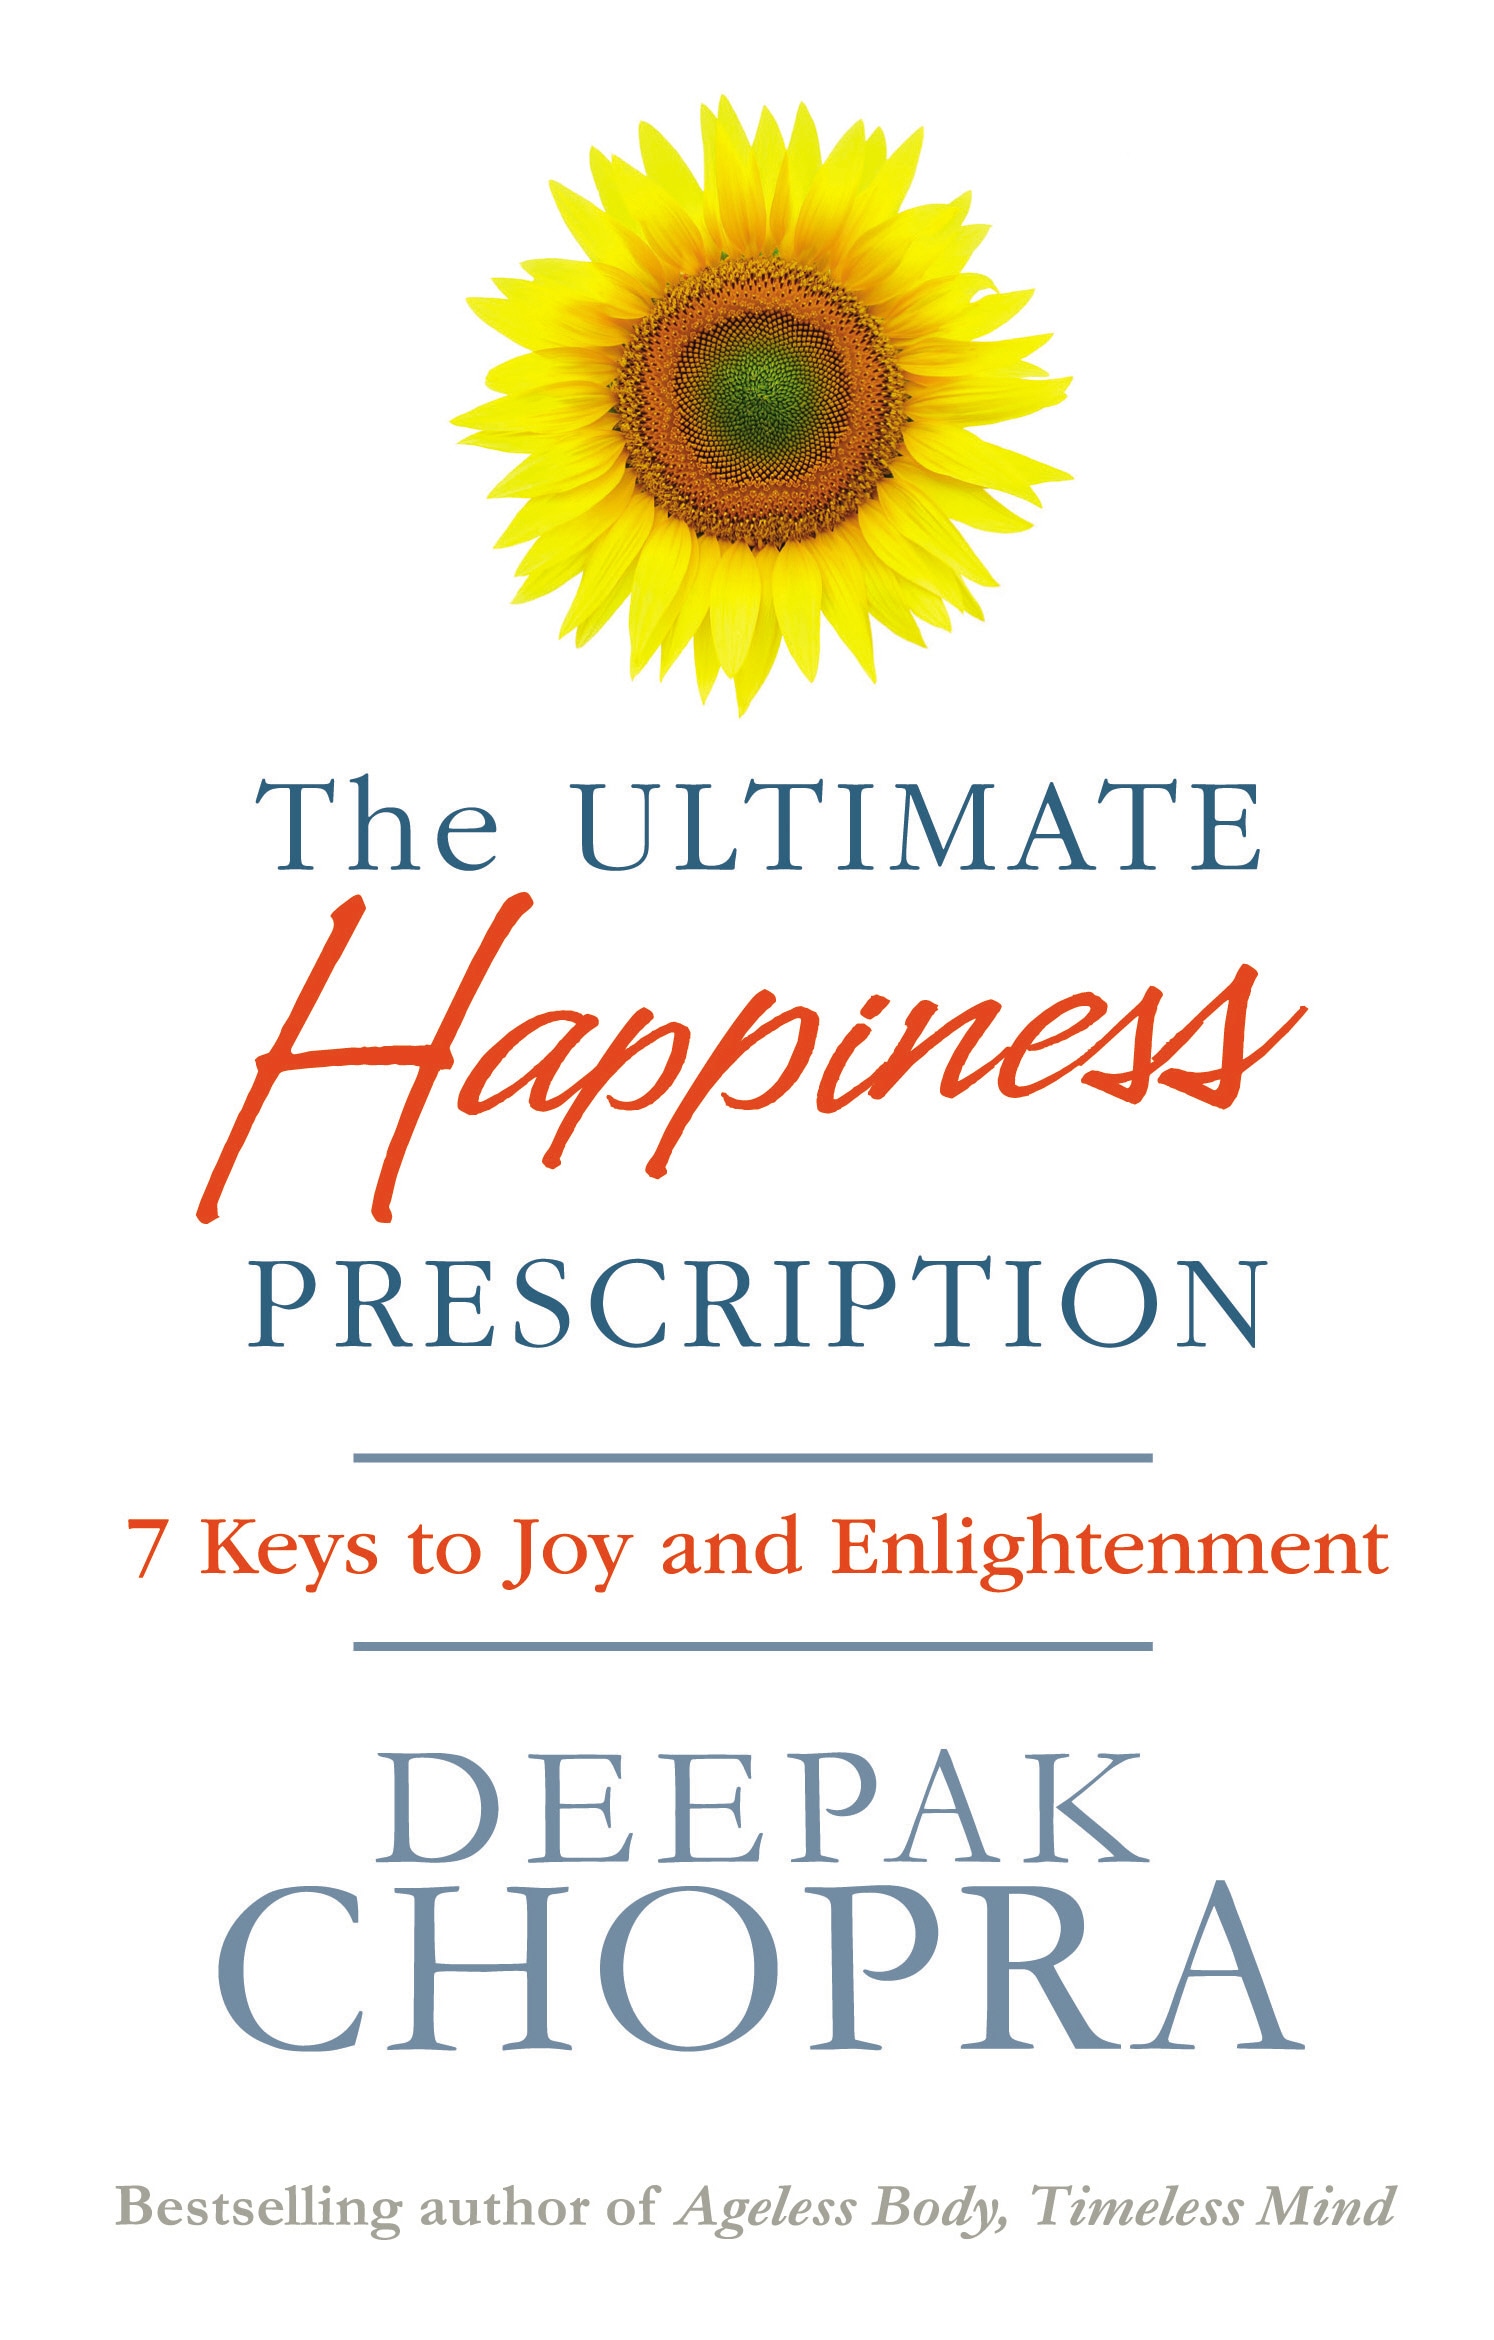 Book “The Ultimate Happiness Prescription” by Deepak Chopra — June 22, 2017